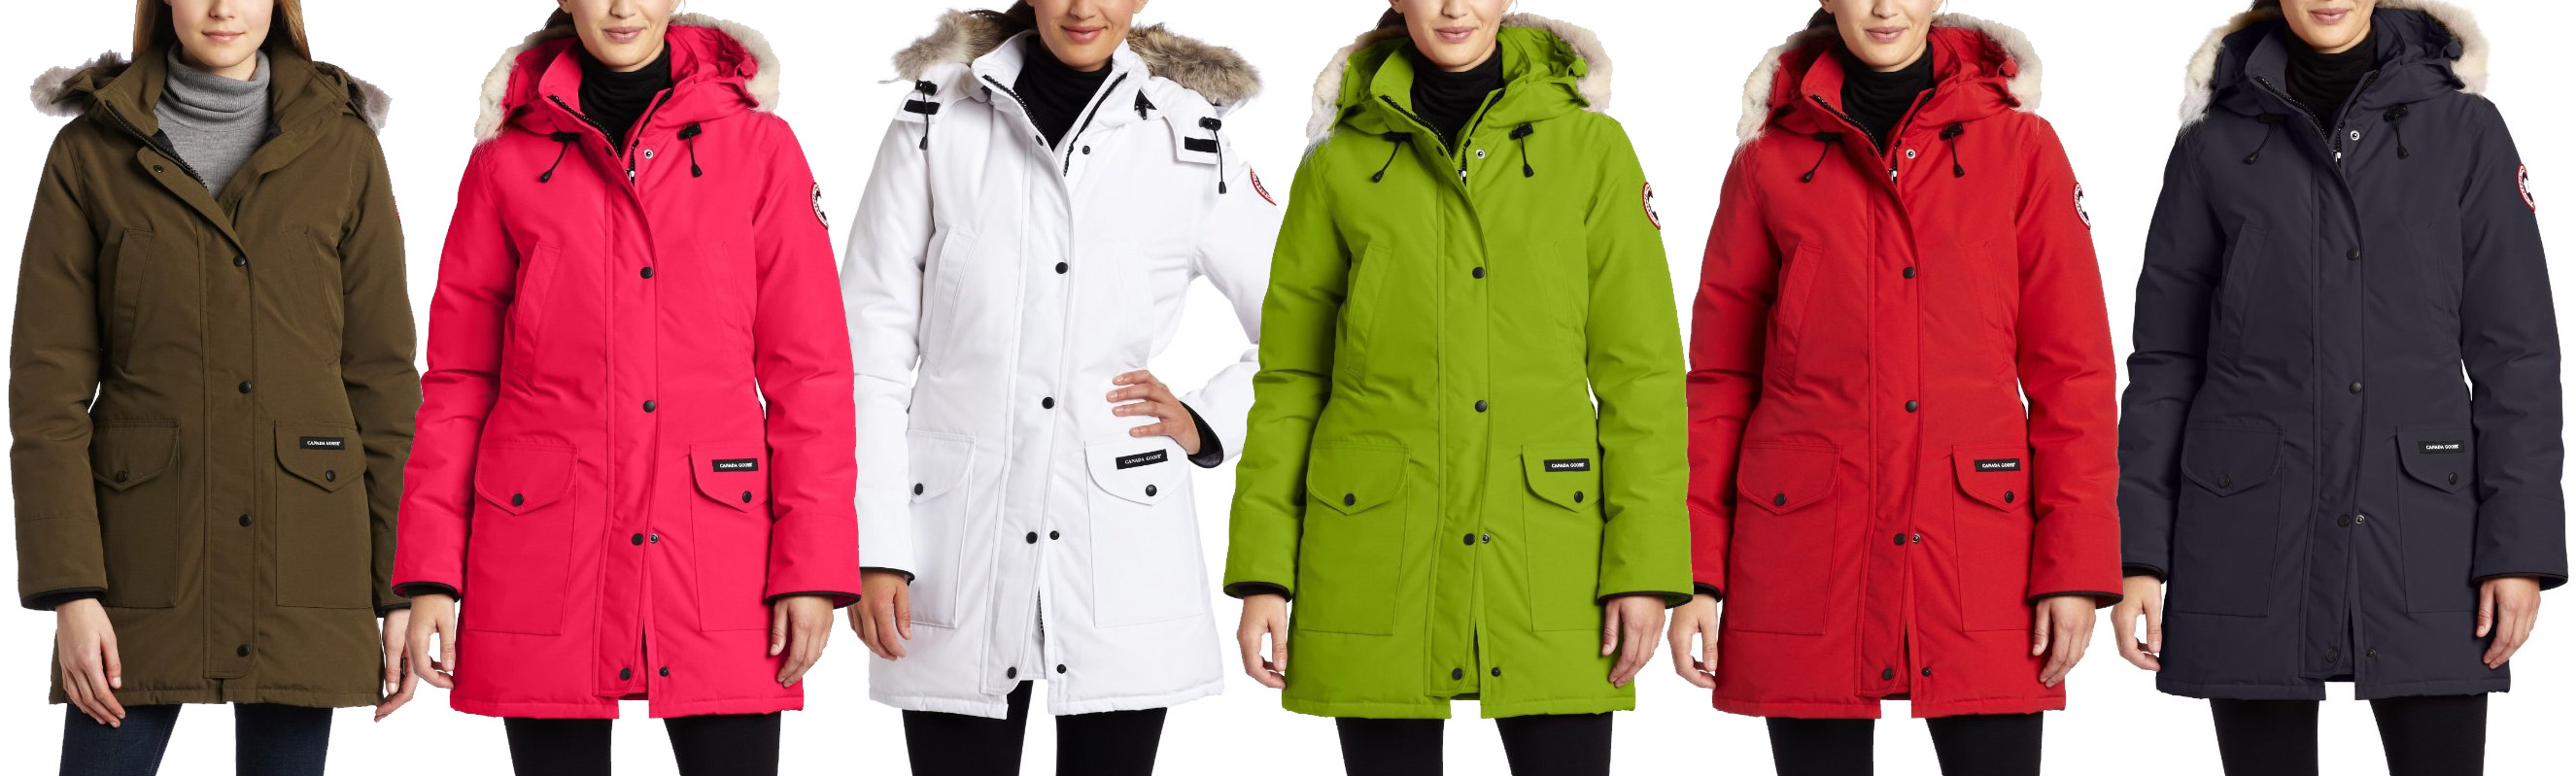 Canada Goose victoria parka outlet store - Canada Goose Trillium Parka best winter Parka? - My Fashion Wants